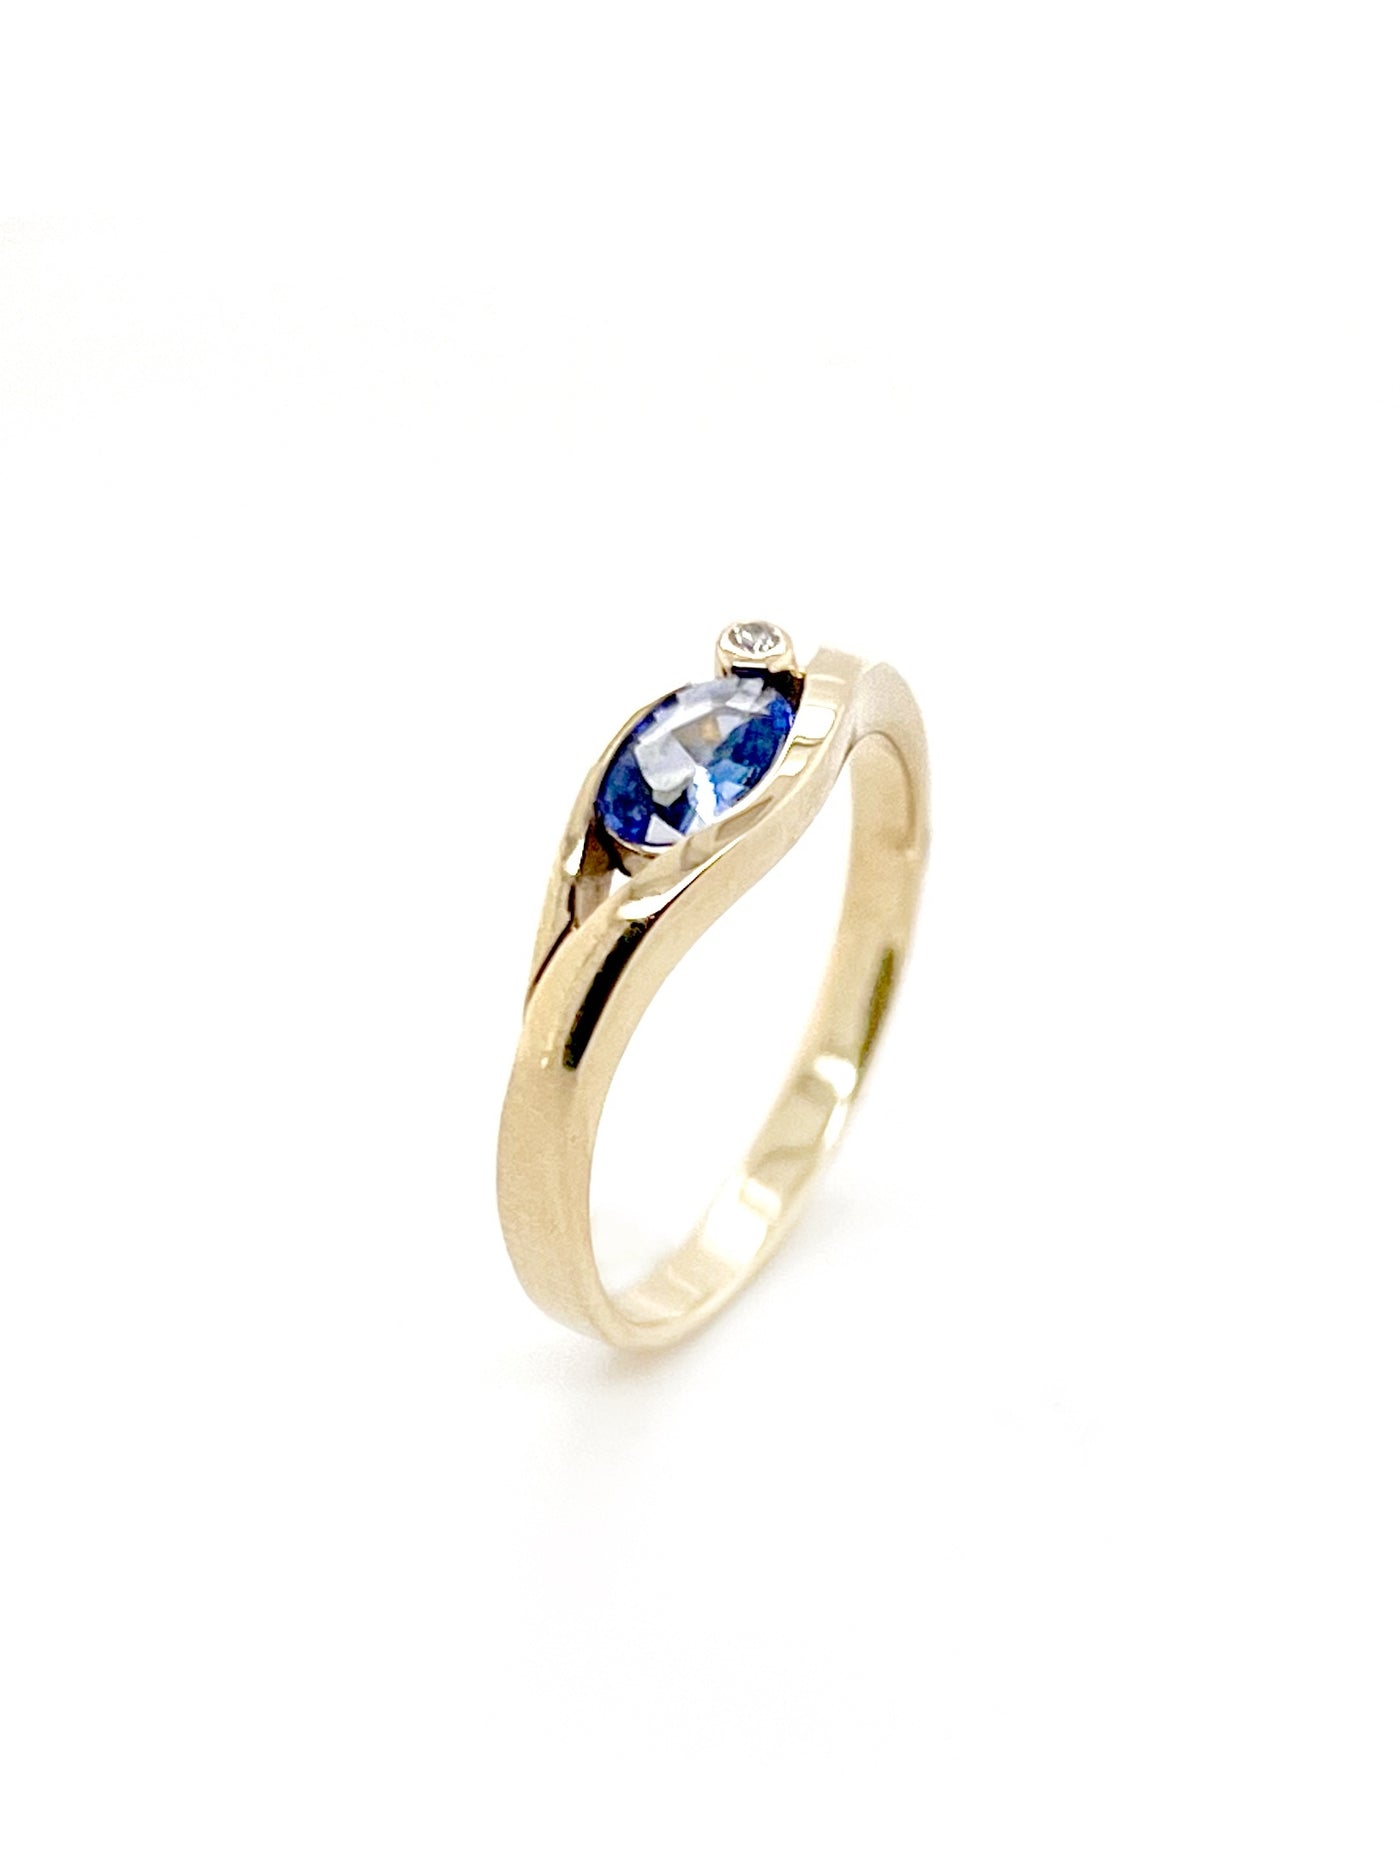 Ceylon sapphire with diamond ring